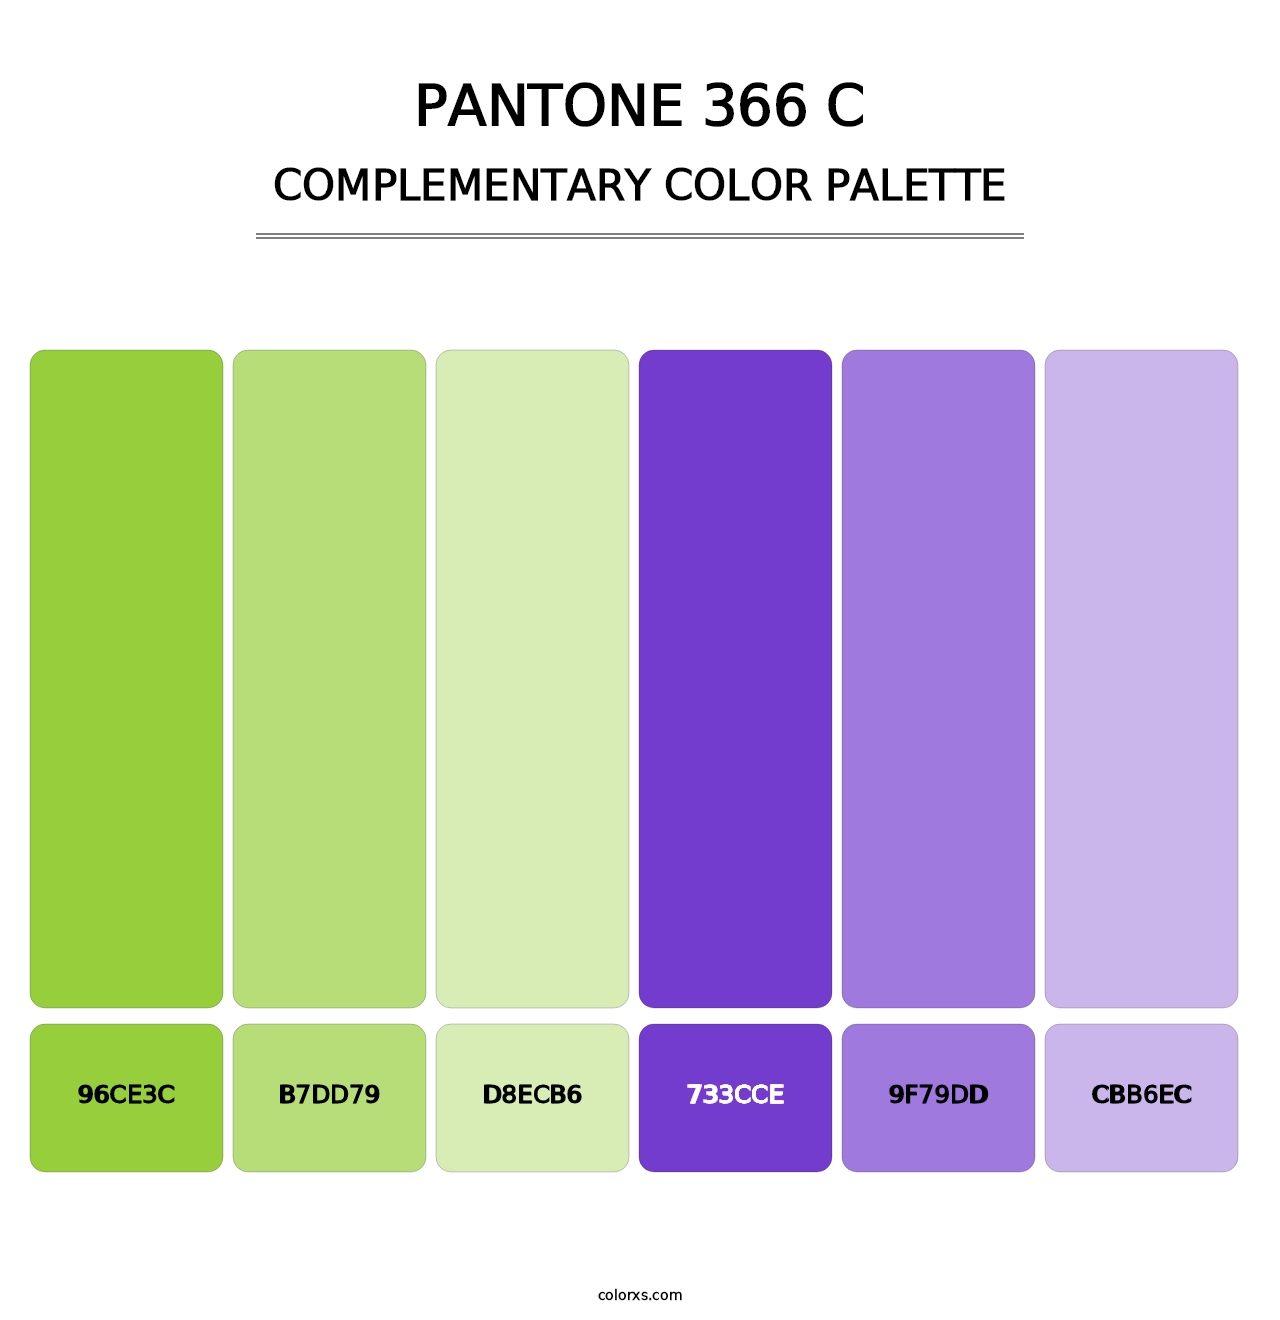 PANTONE 366 C - Complementary Color Palette